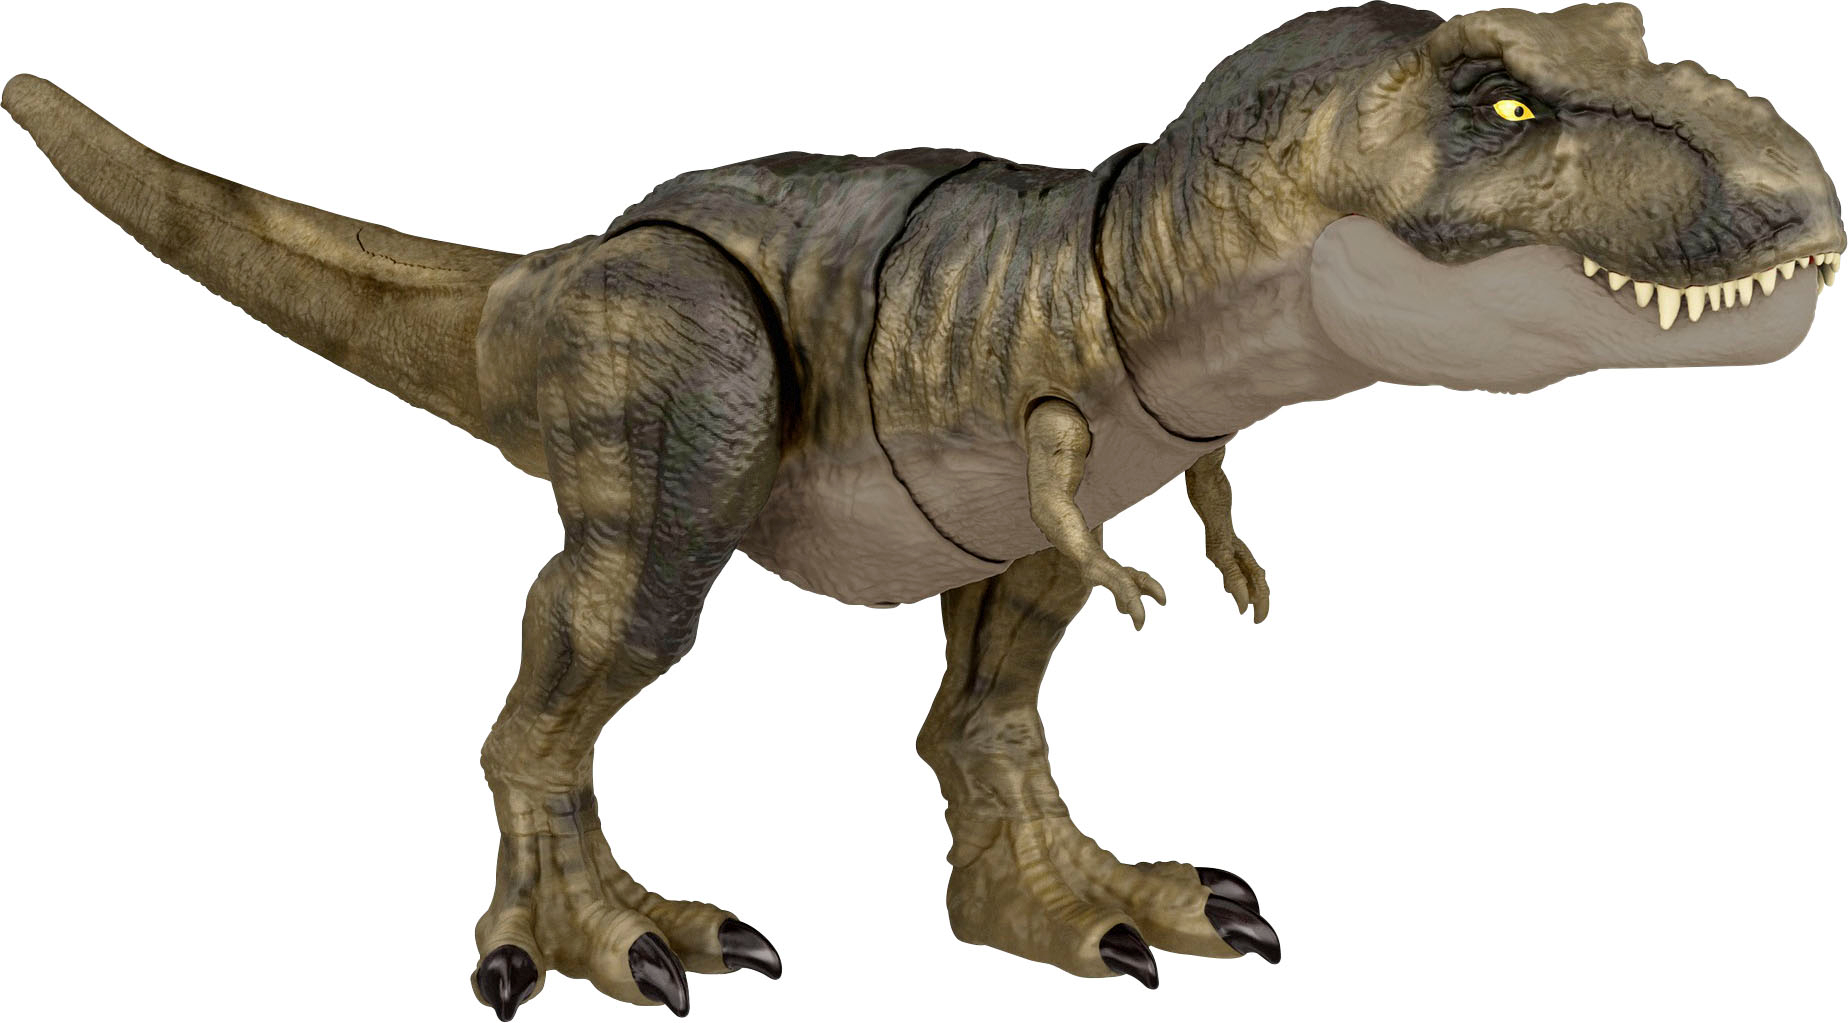 Jurassic World Thrash 'N Devour T-Rex HDY55 - Best Buy